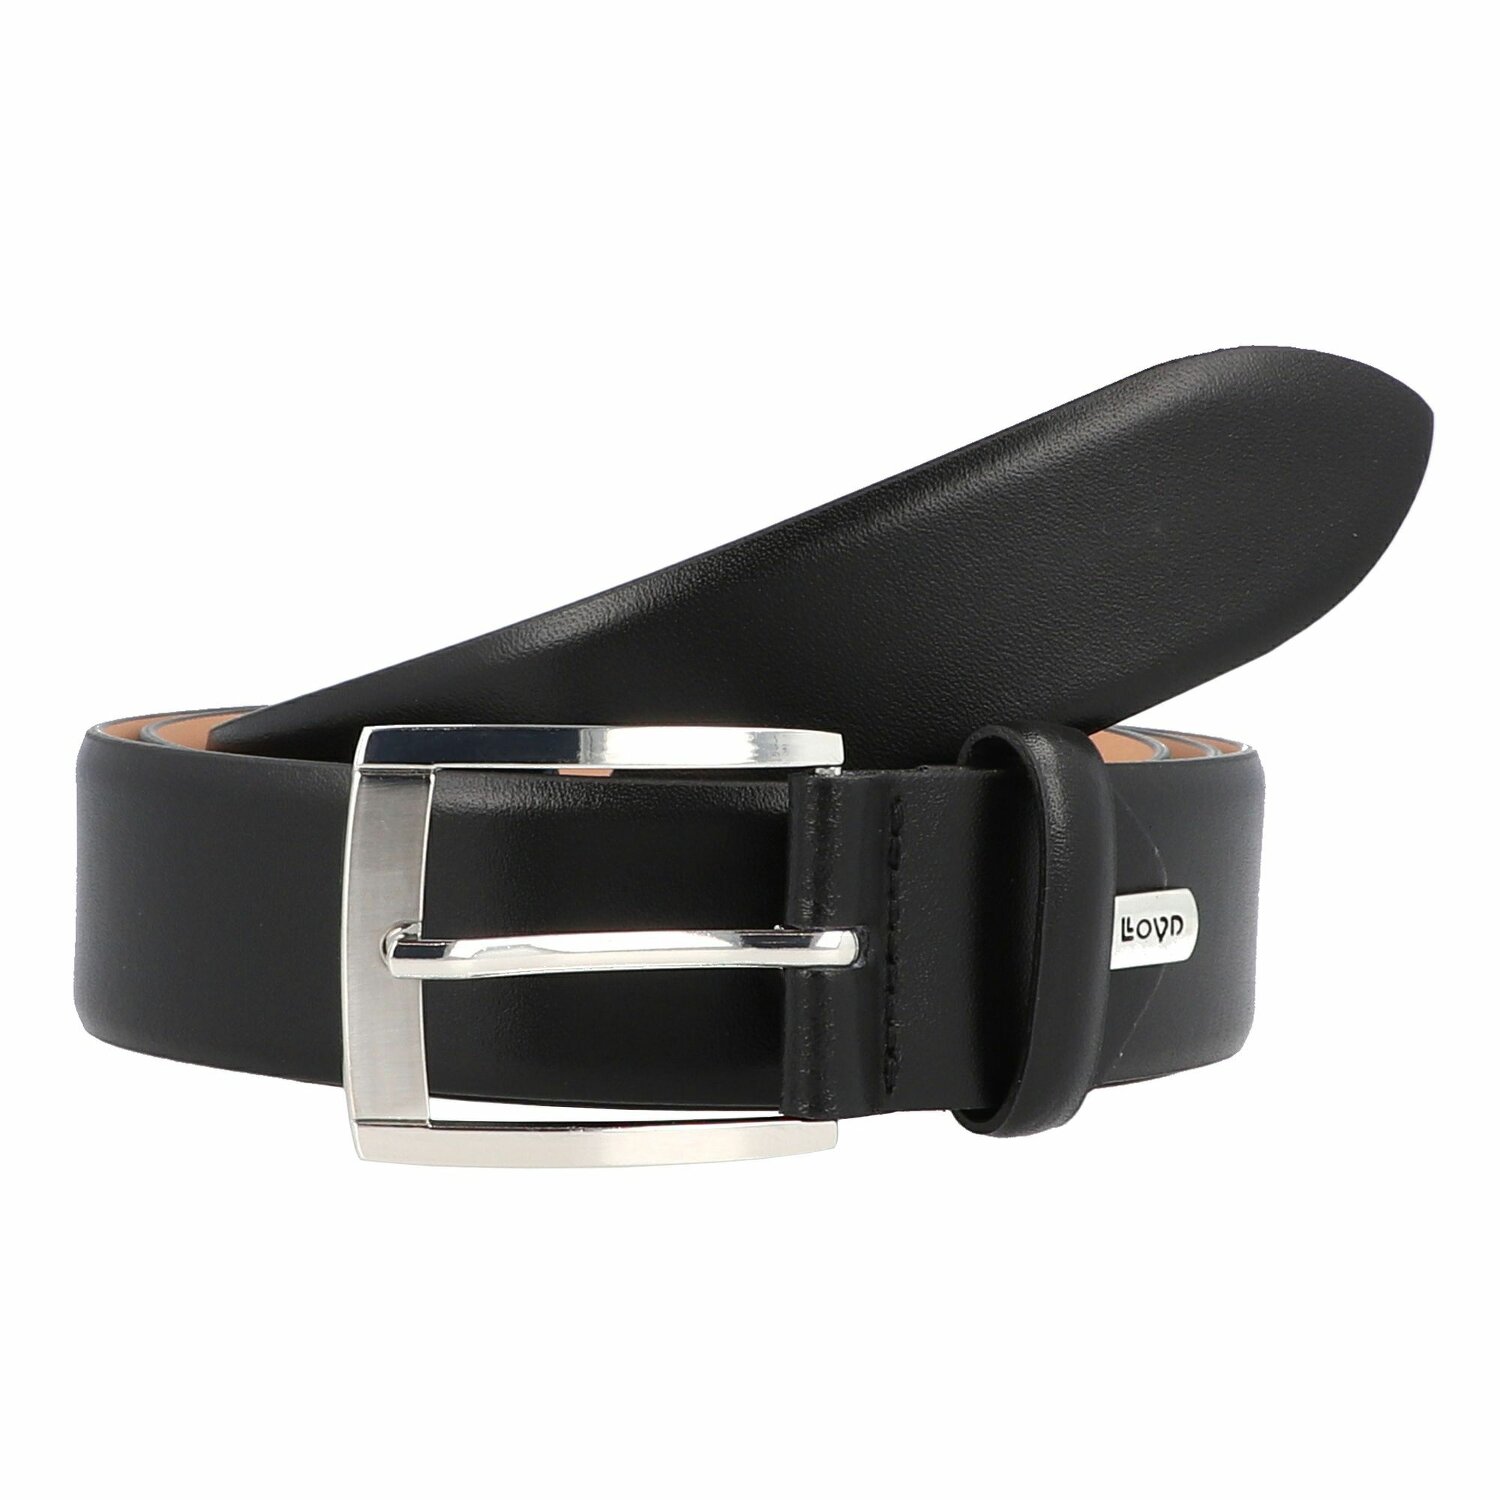 Lloyd Men's Belts Gürtel Leder schwarz | 105 cm | bei